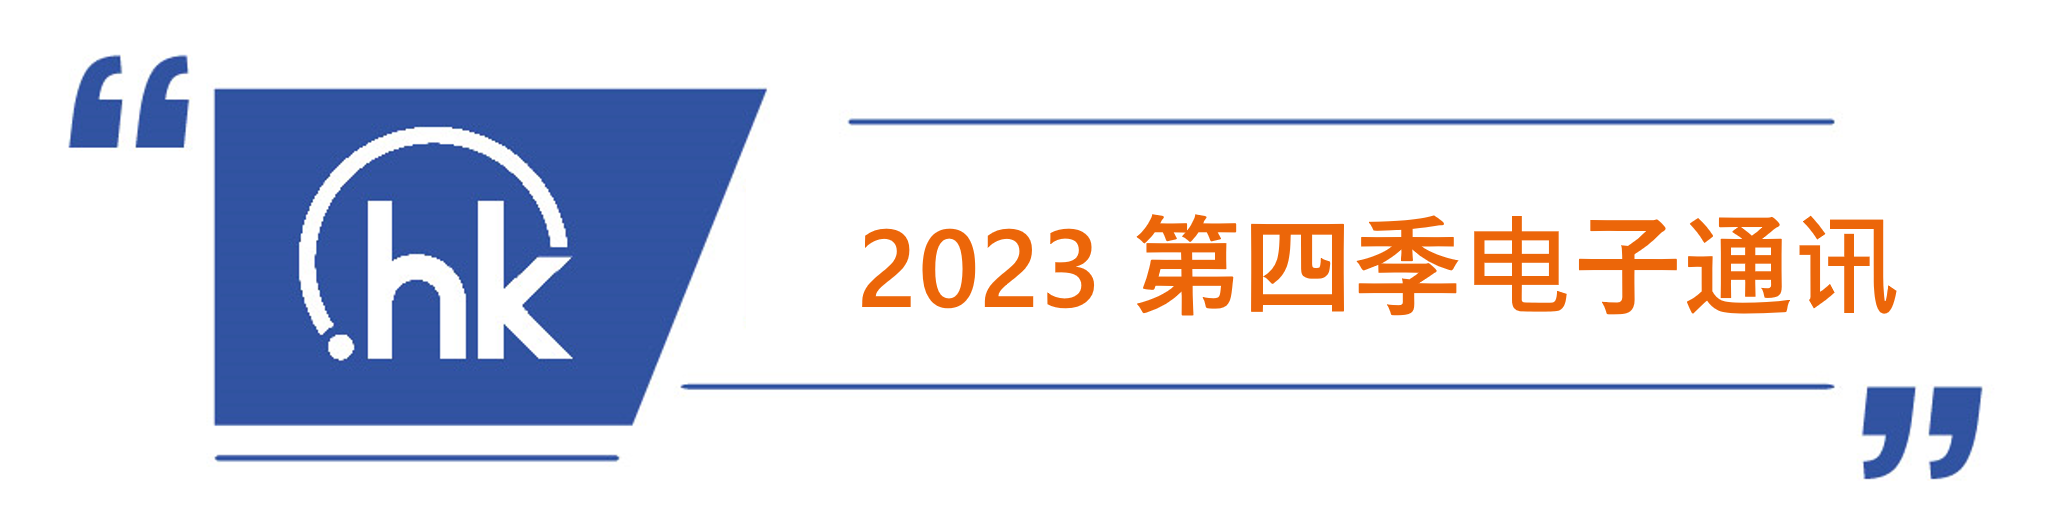 HKIRC 2023 Q4 e-news (3)